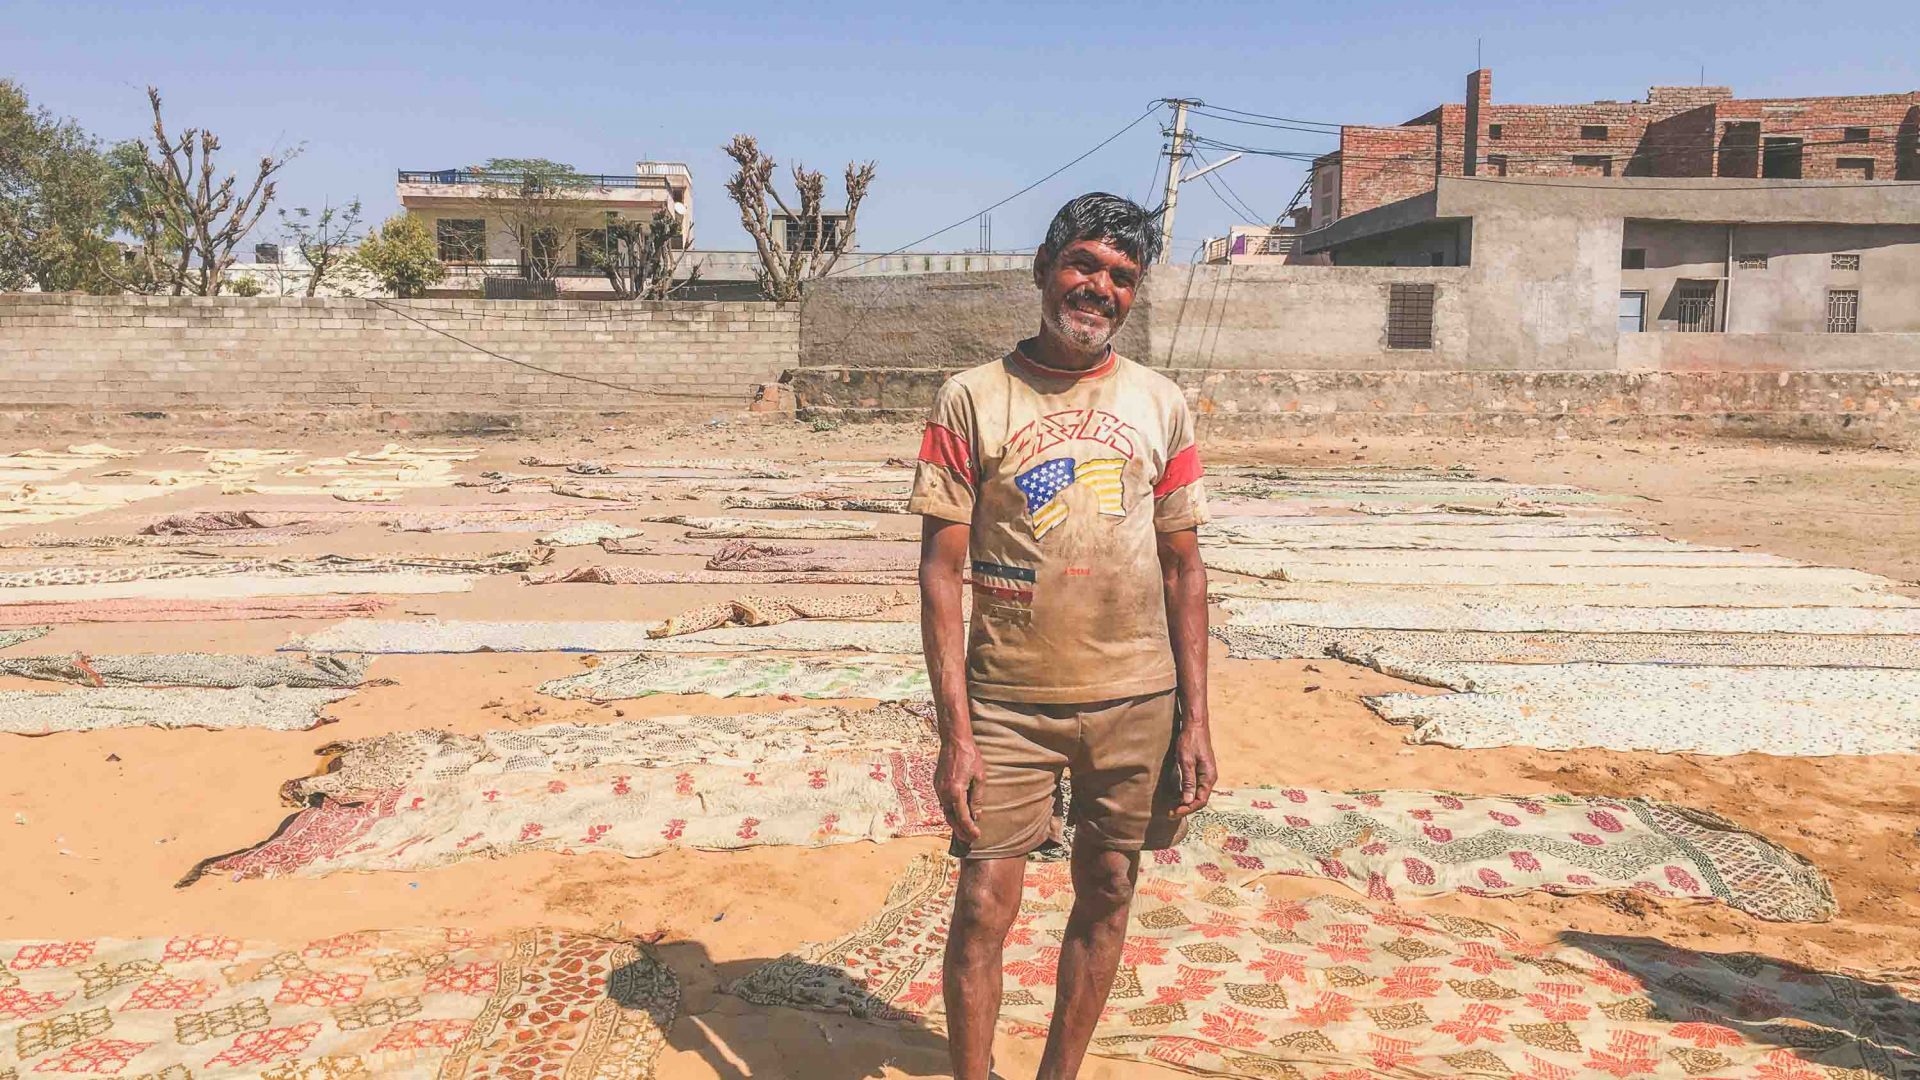 Babu Lal Dobhi, the elder of a washing family in Bagru's drying fields, Rjasthan, India.